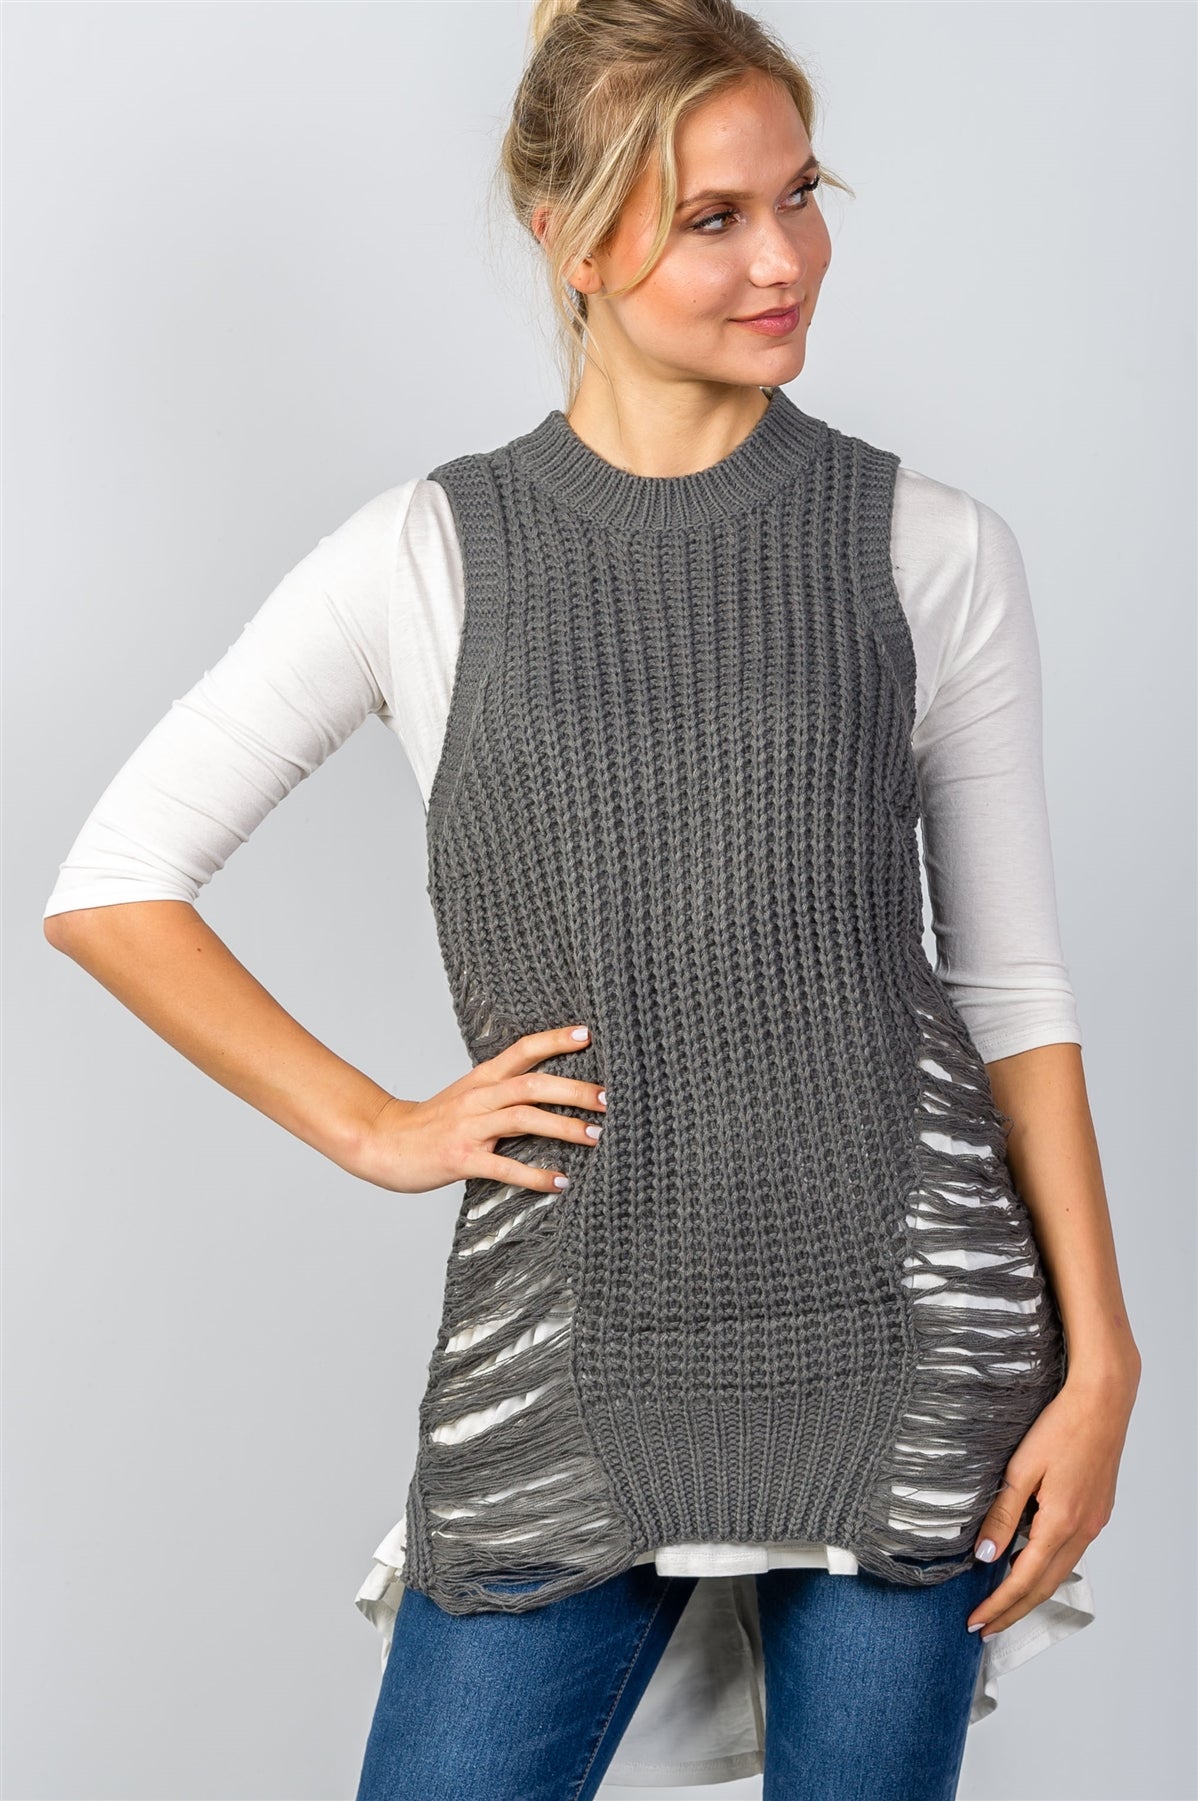 Ladies fashion round neckline sleeveless sweater knit distress sides dress